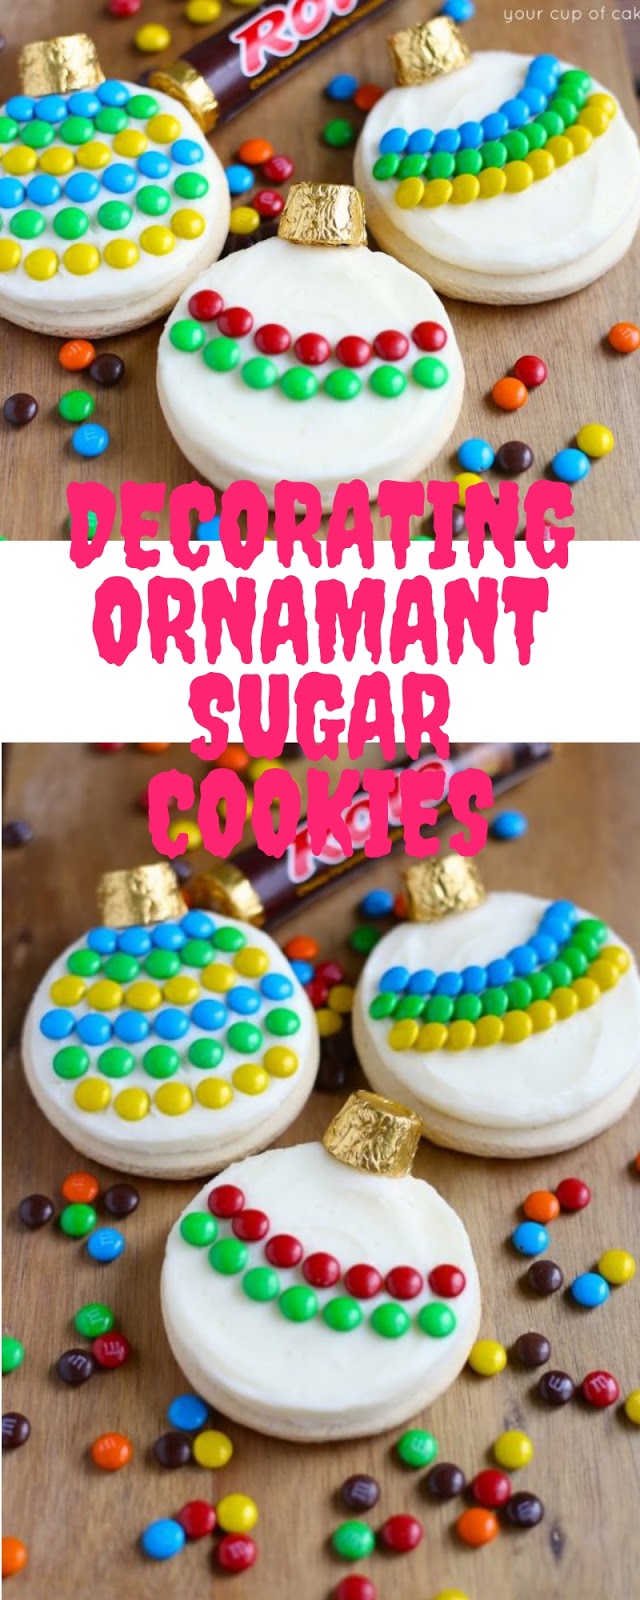 Decorating Ornamant Sugar Cookies #christmas #cookies | Make Yummy Foods